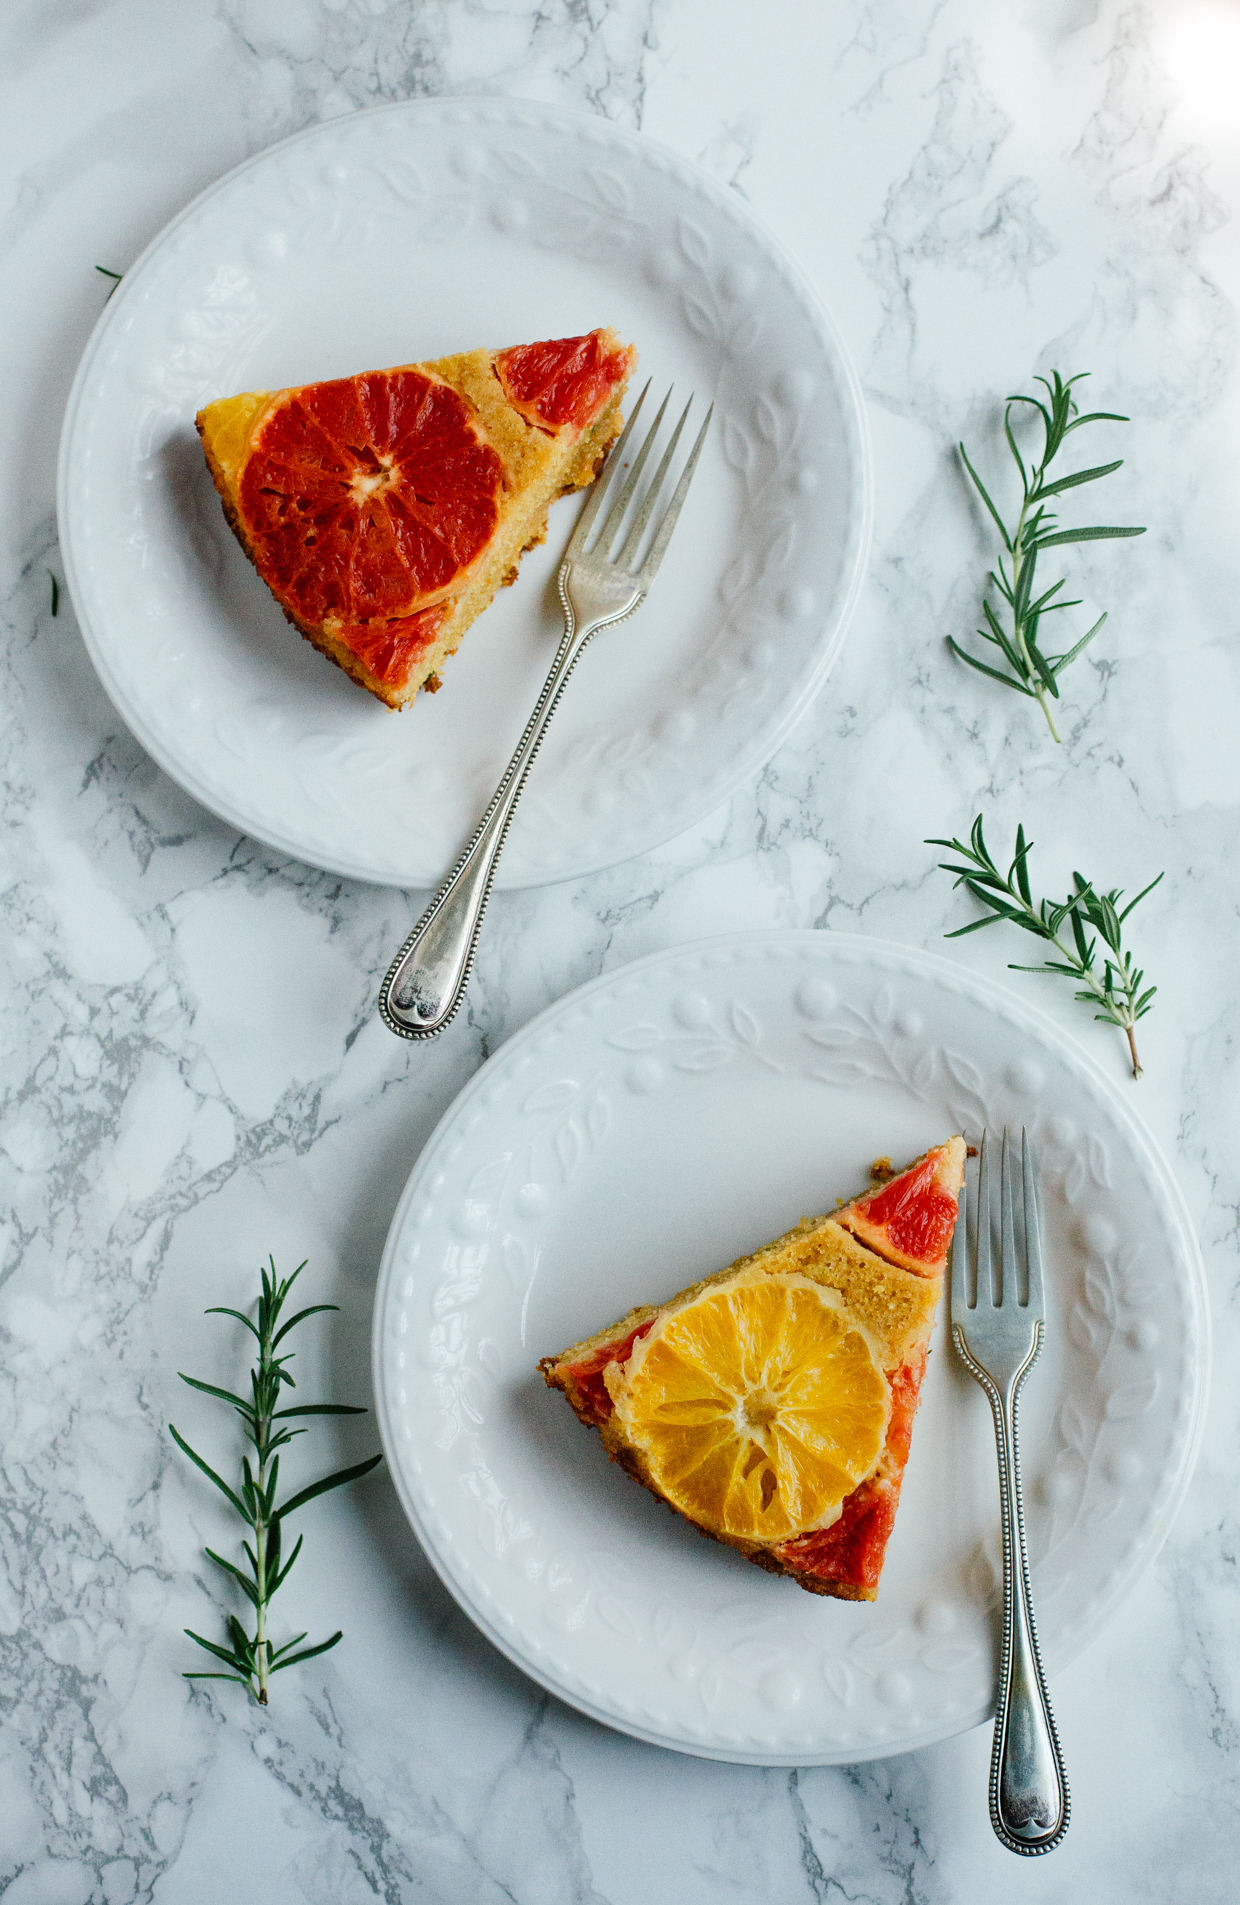 Citrus & rosemary olive oil polenta cake